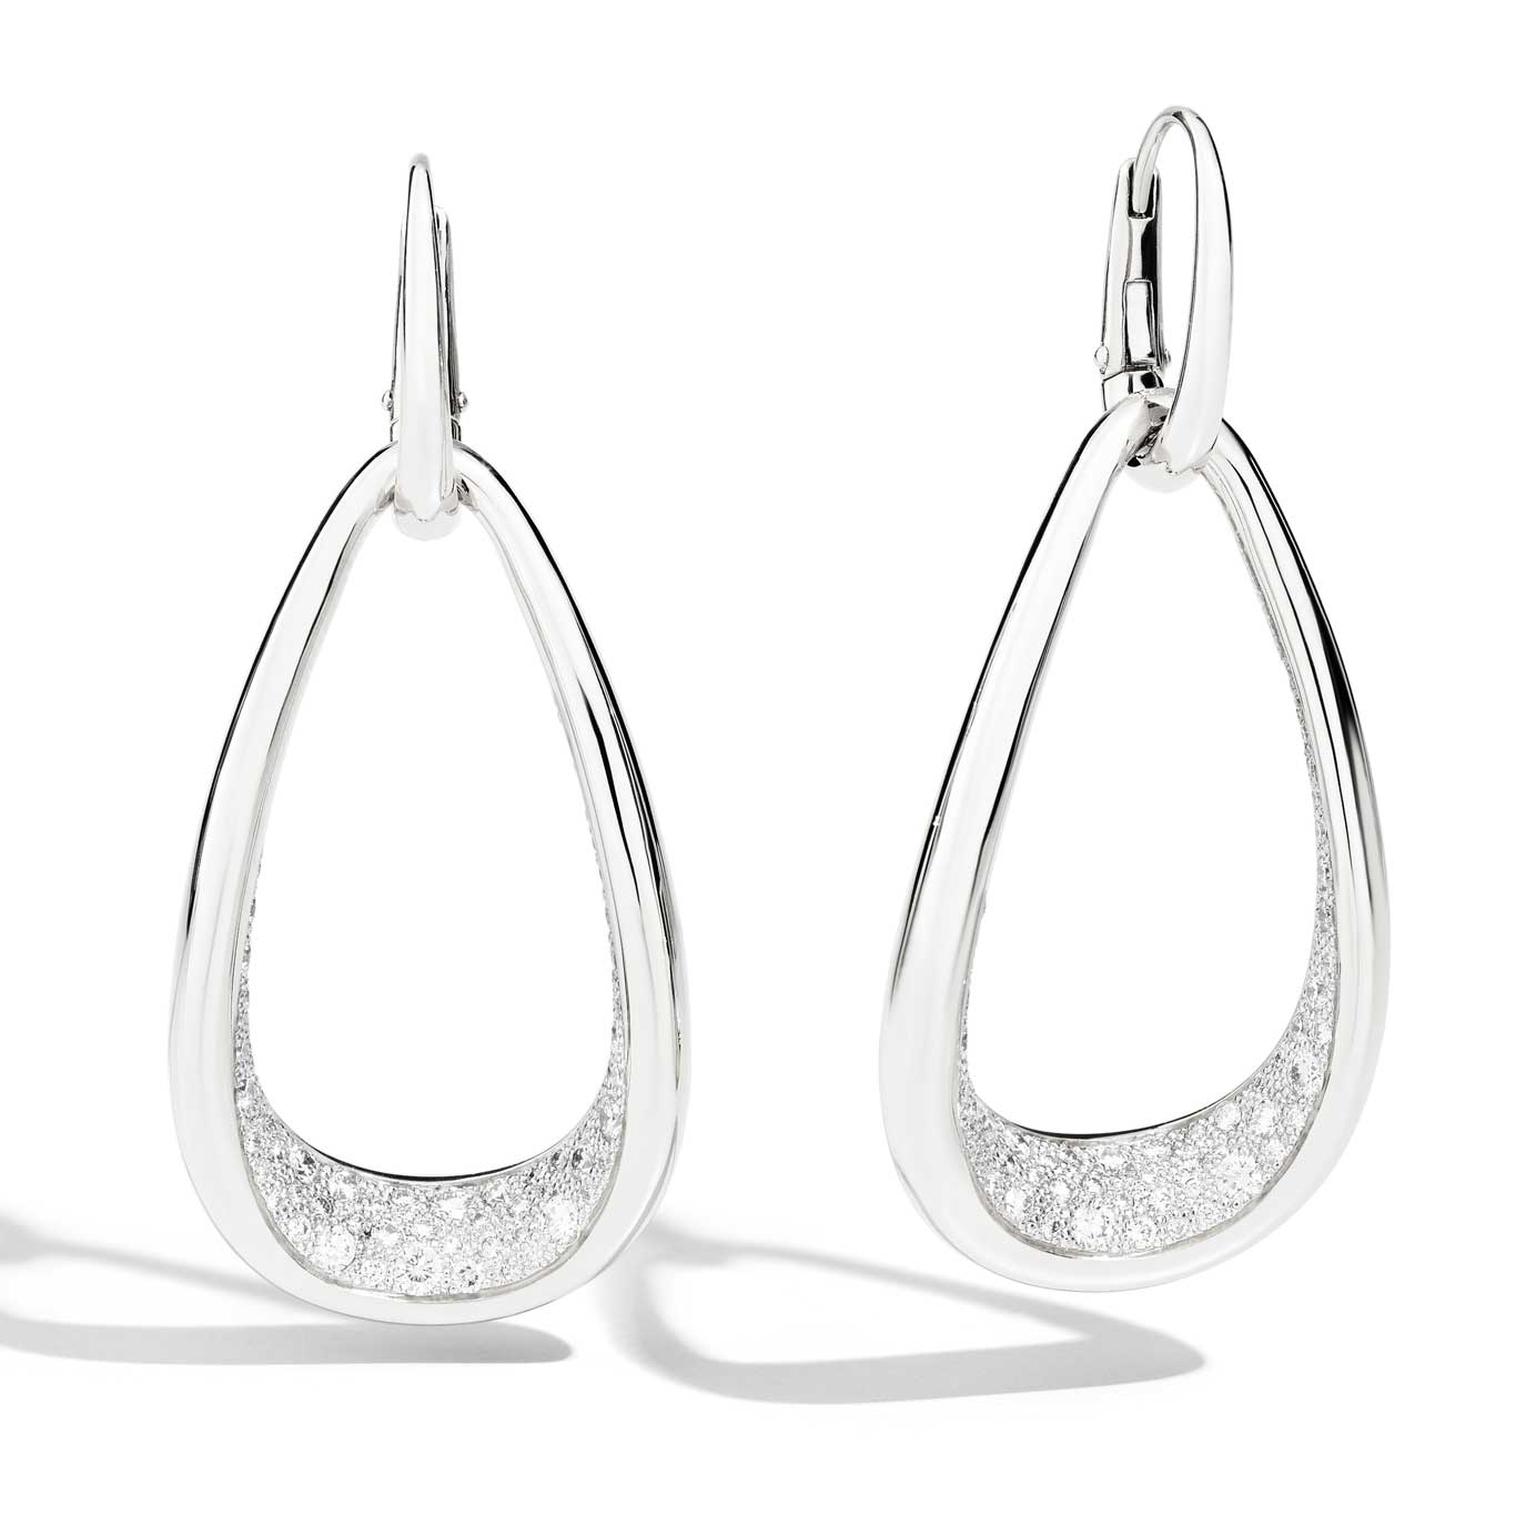 Pomellato Fantina earrings in white gold and diamonds